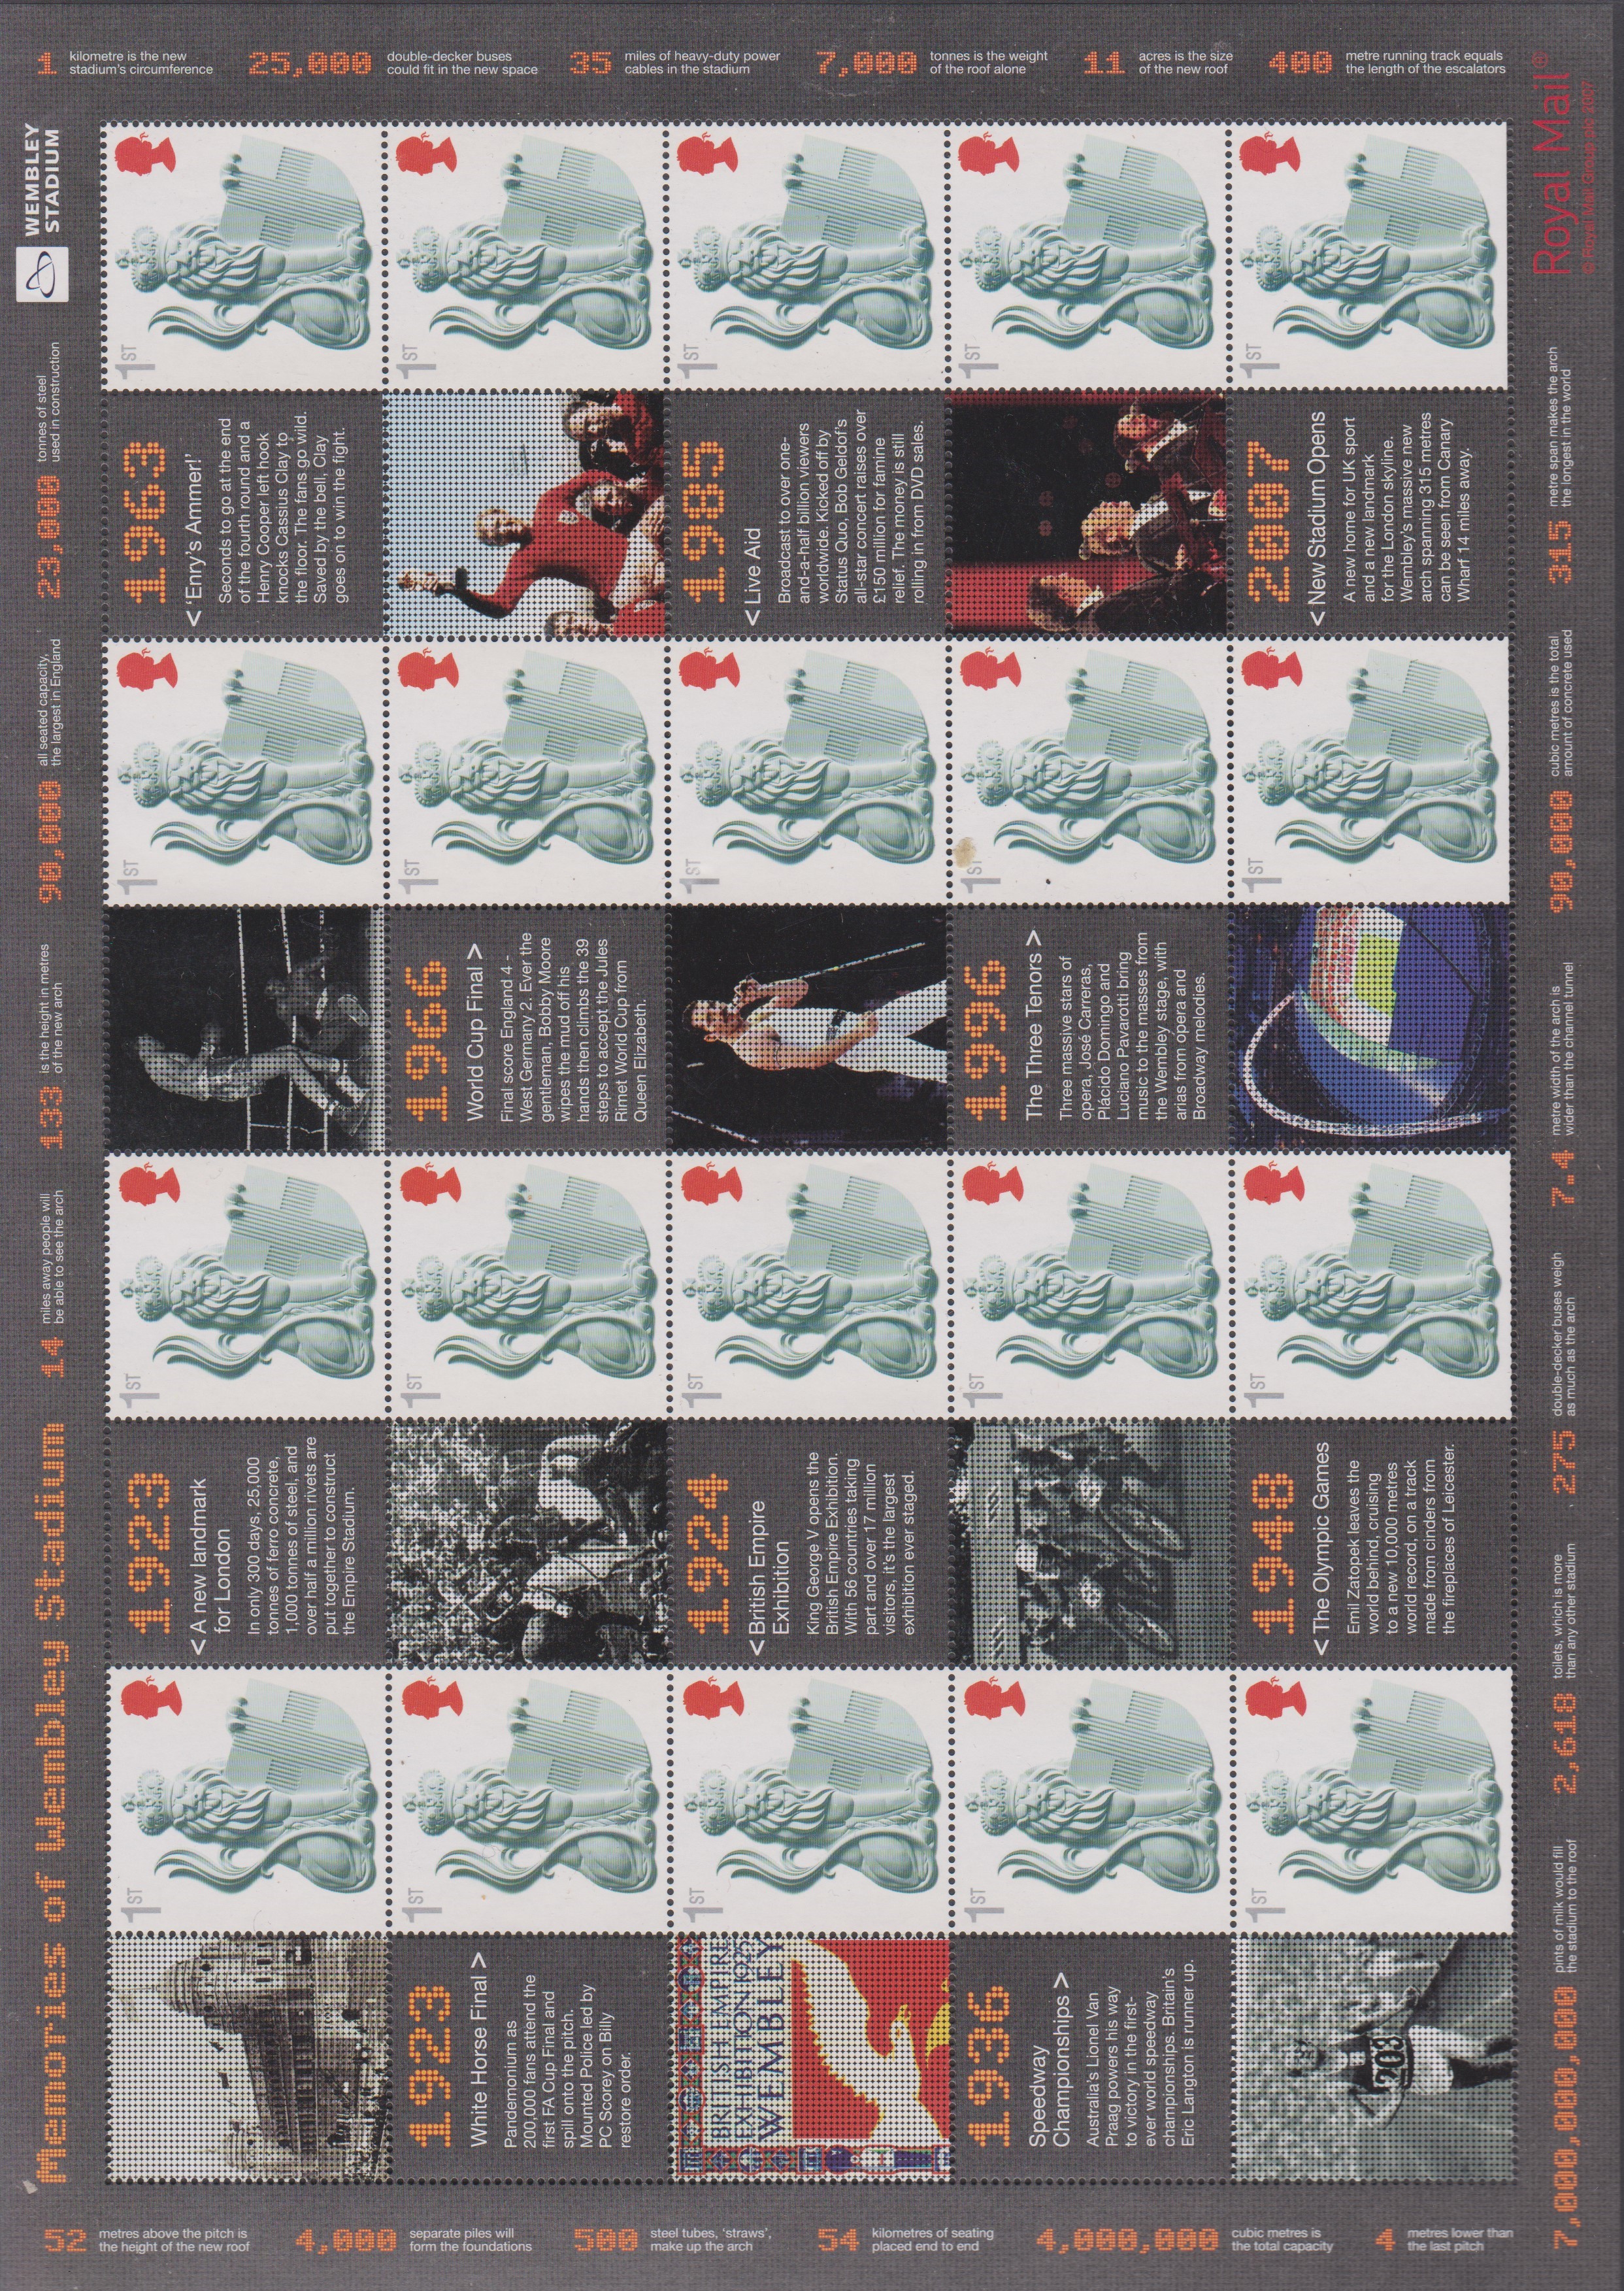 Great Britain 2007-Memories of Wembley Stadium, u/m Post Office label sheet of (20) SG2291 1st class